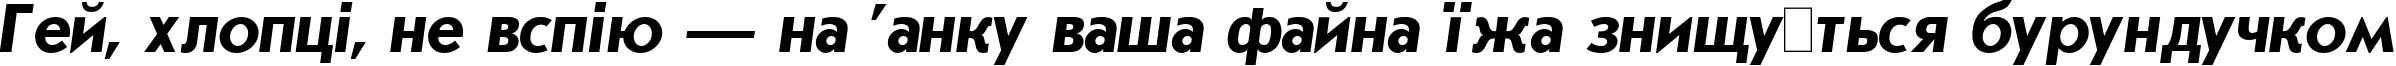 Пример написания шрифтом Journal SansSerif Bold Italic:001.001 текста на украинском